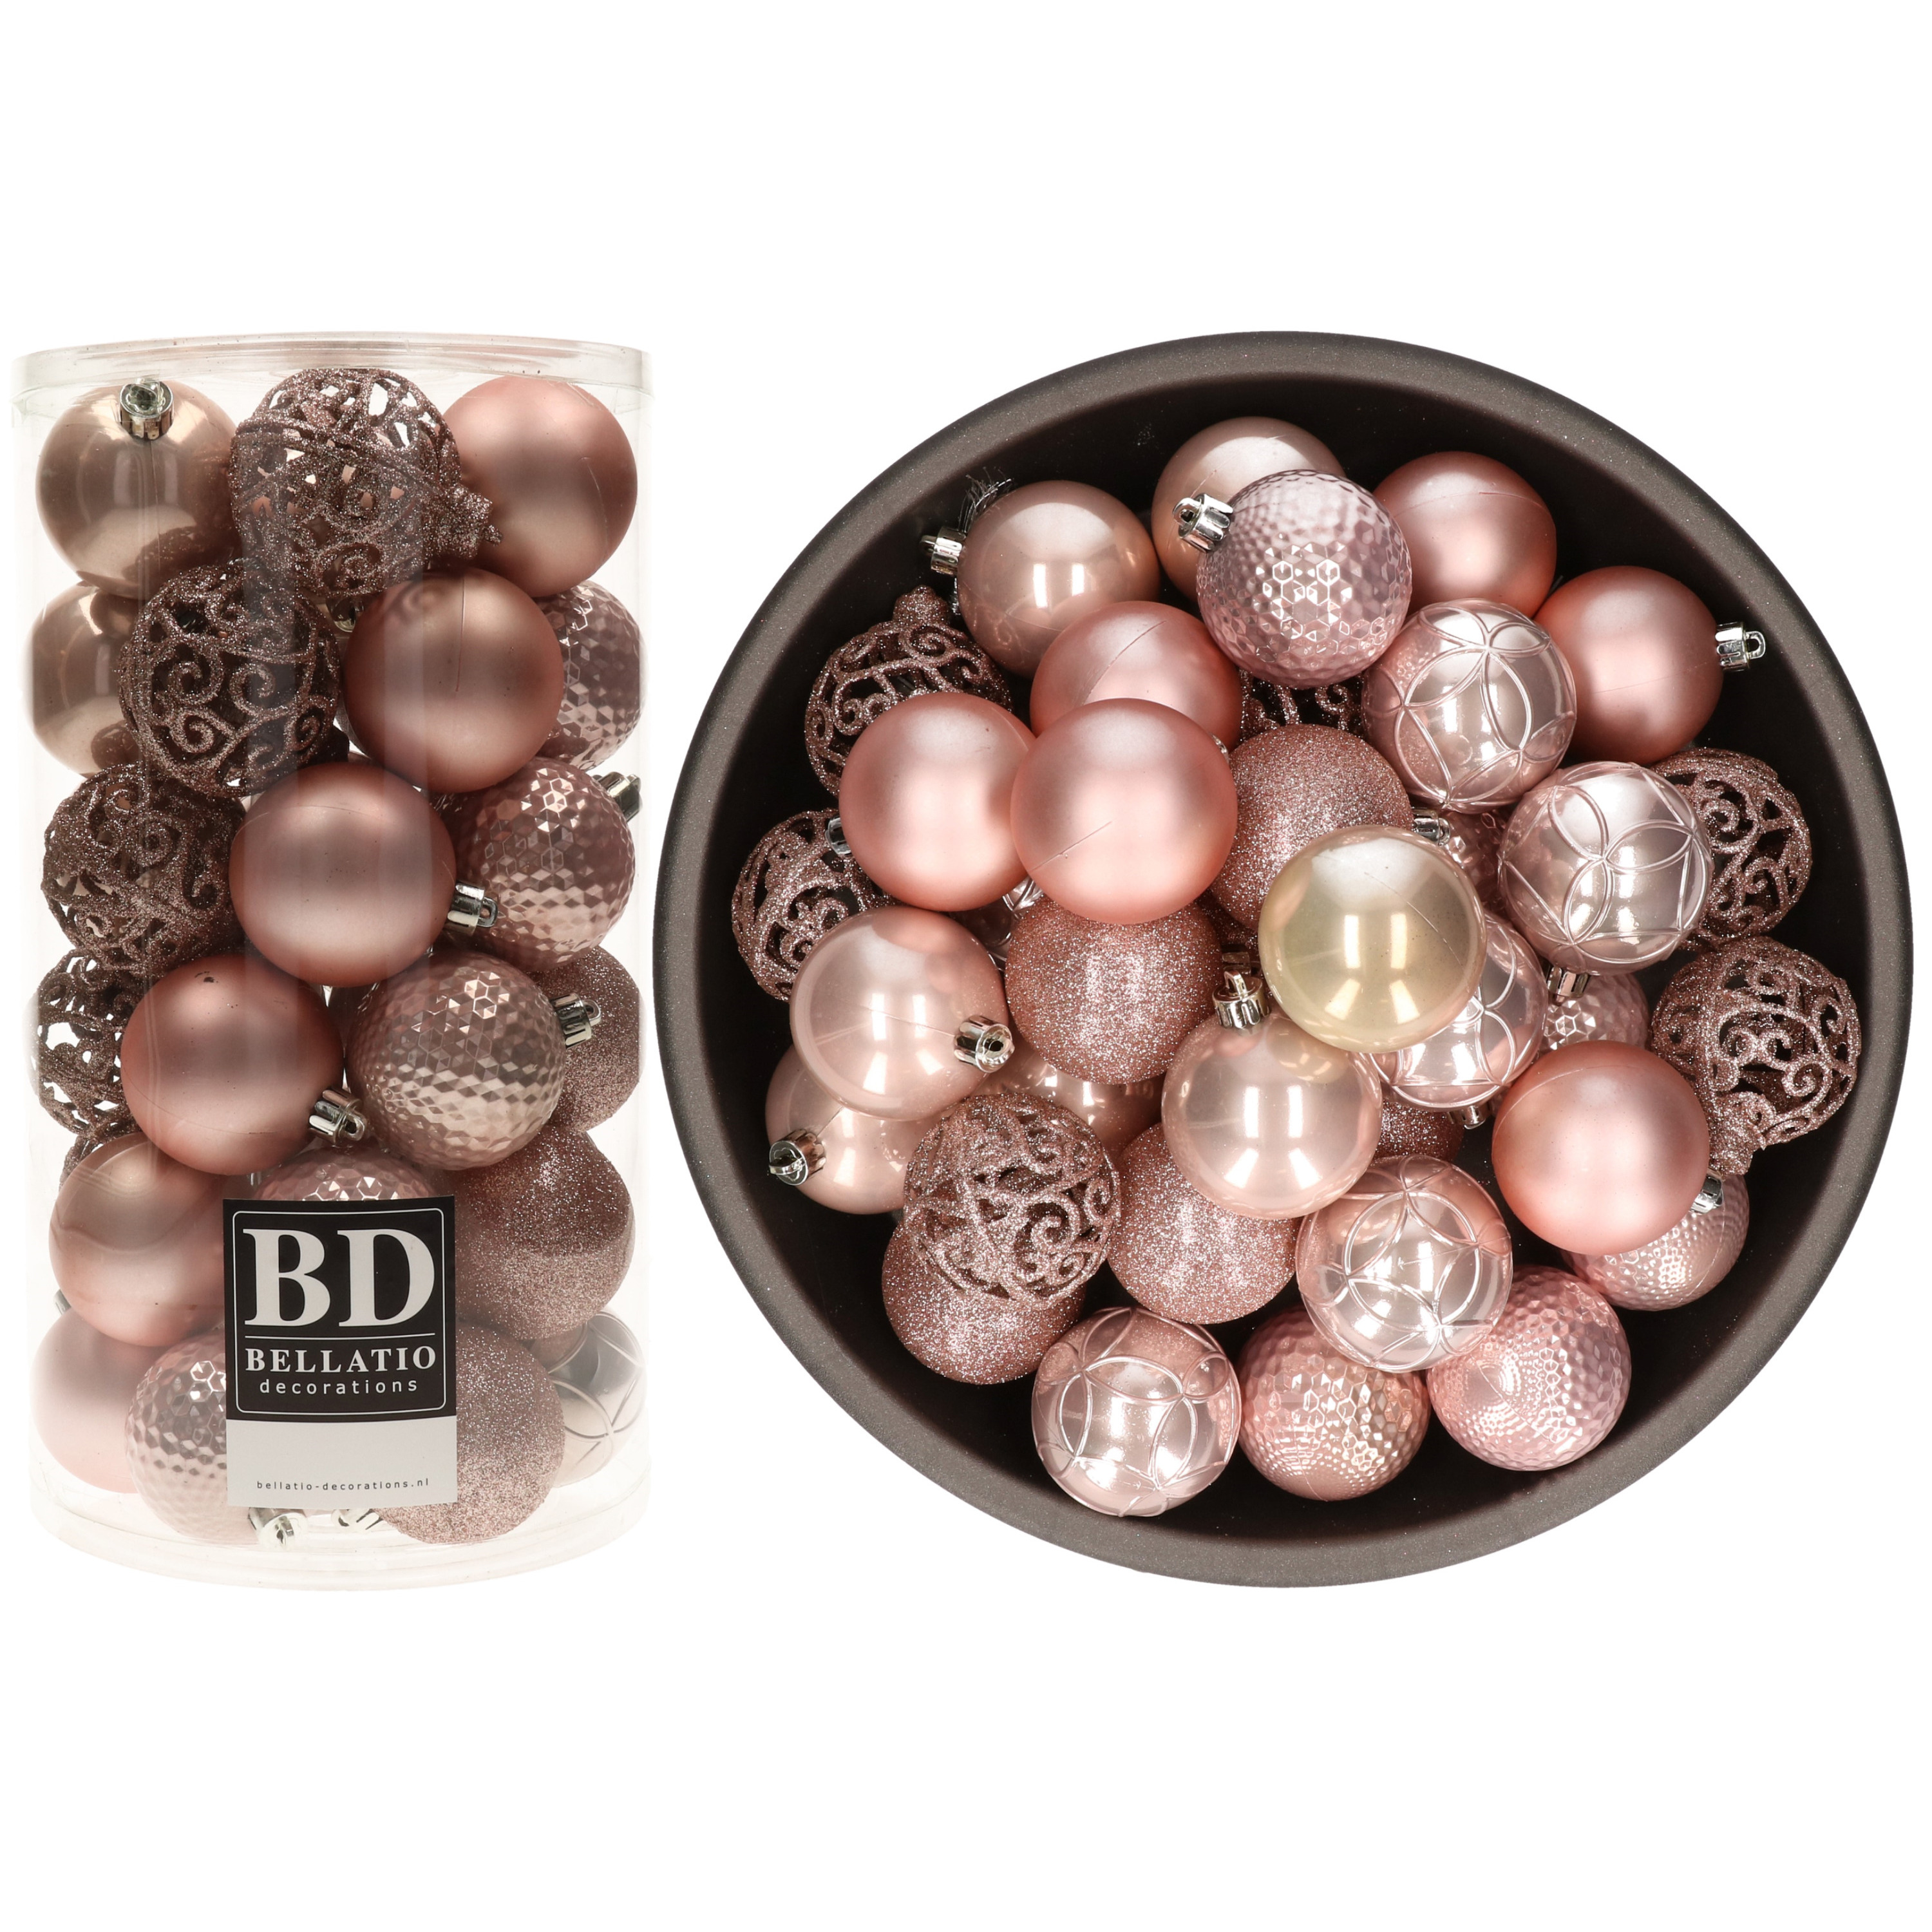 74x stuks kunststof kerstballen lichtroze (blush pink) 6 cm glans-mat-glitter mix